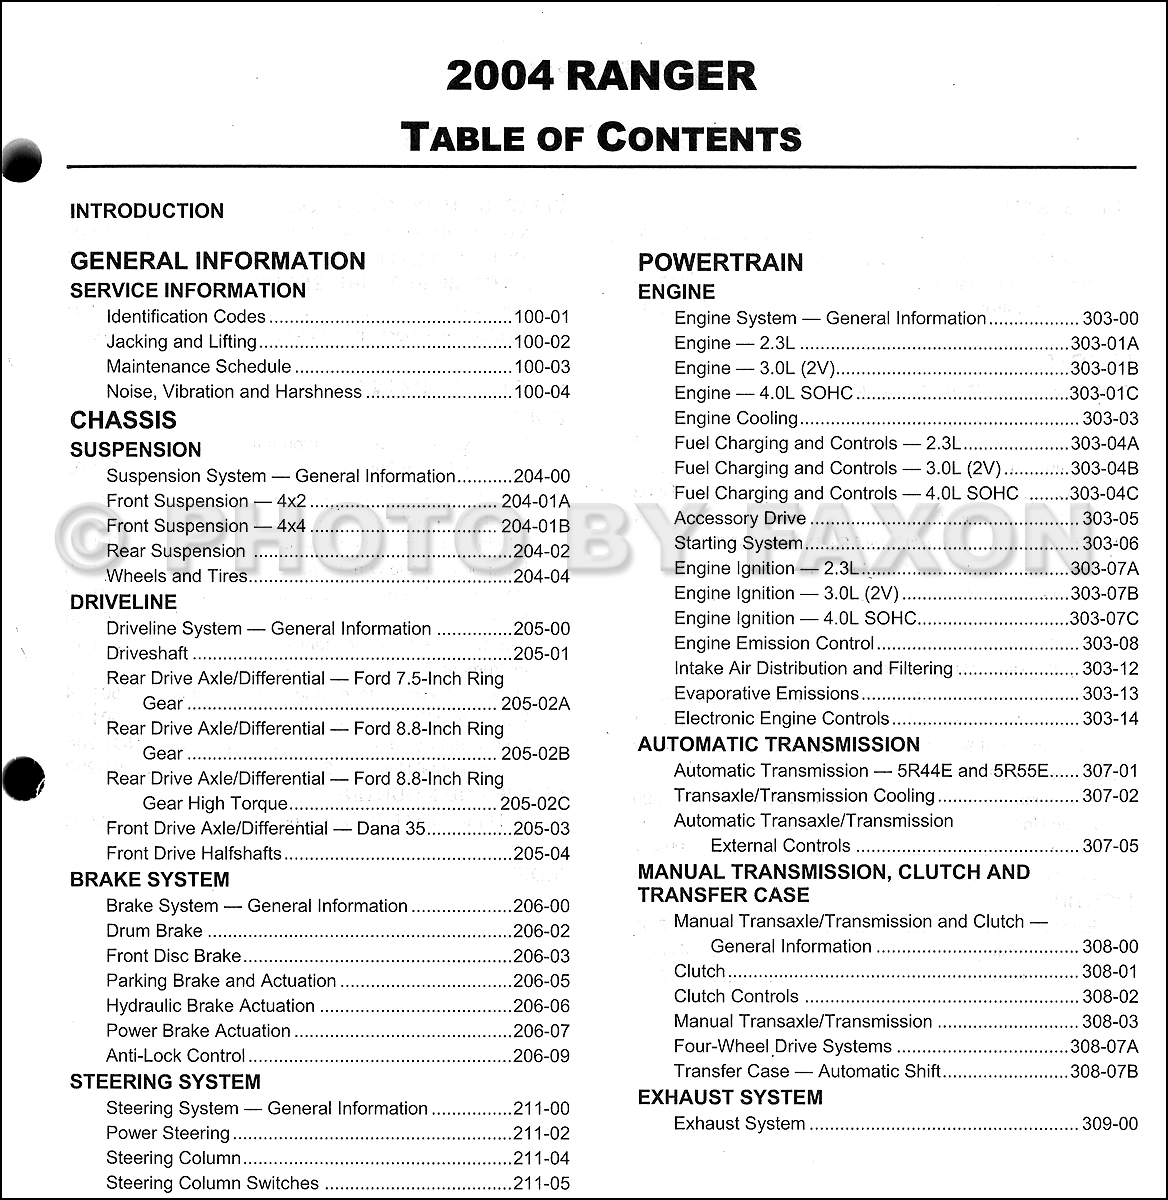 2004 Ford ranger service manual #1